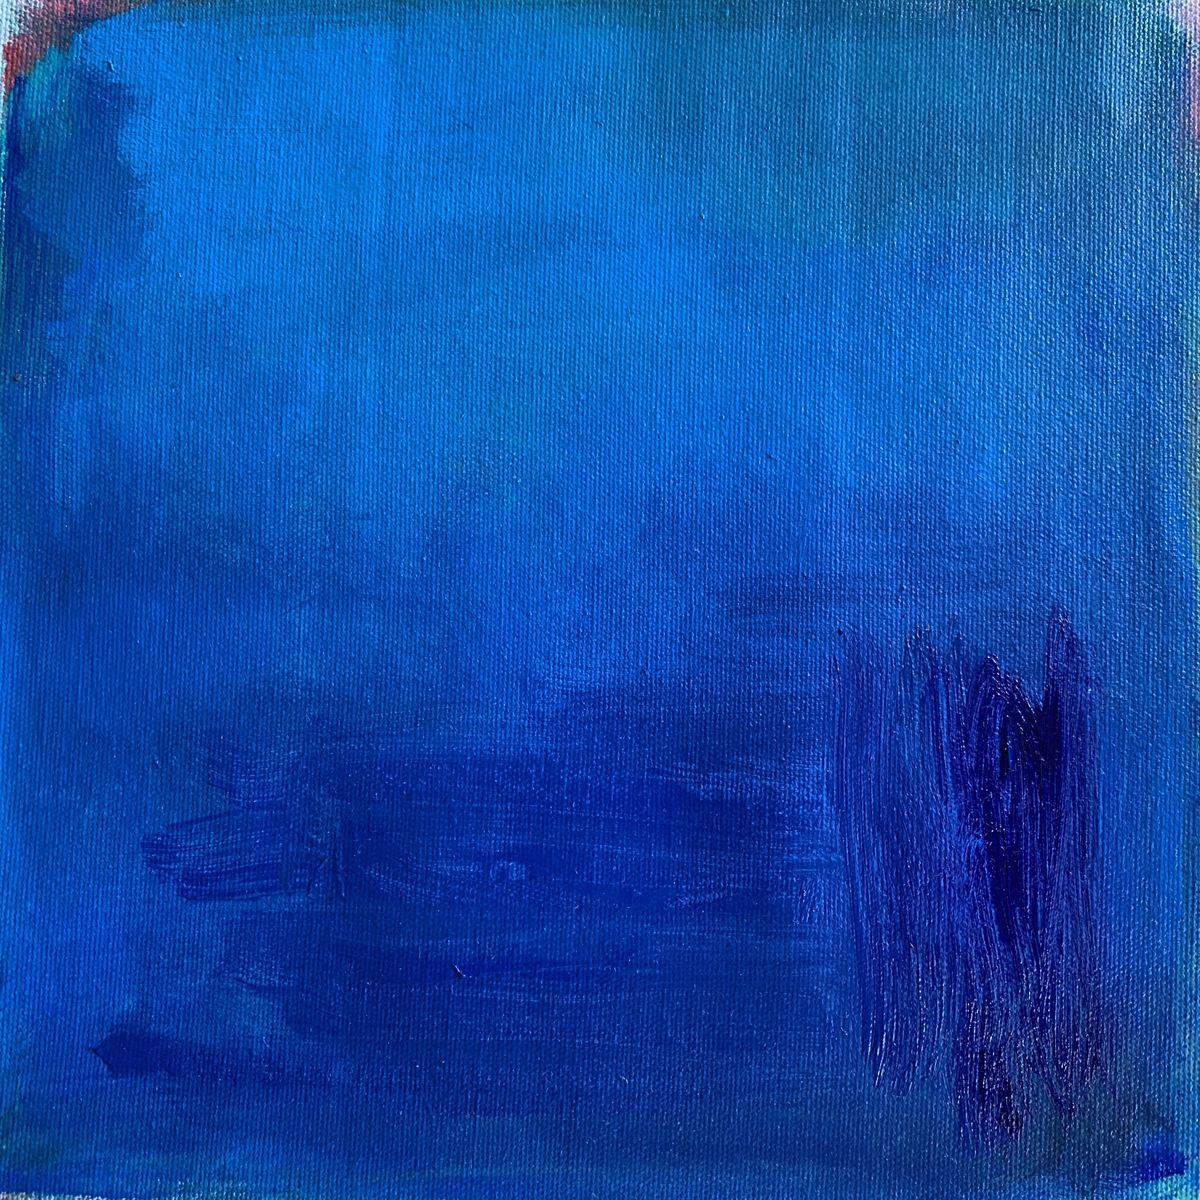 deep blue painting